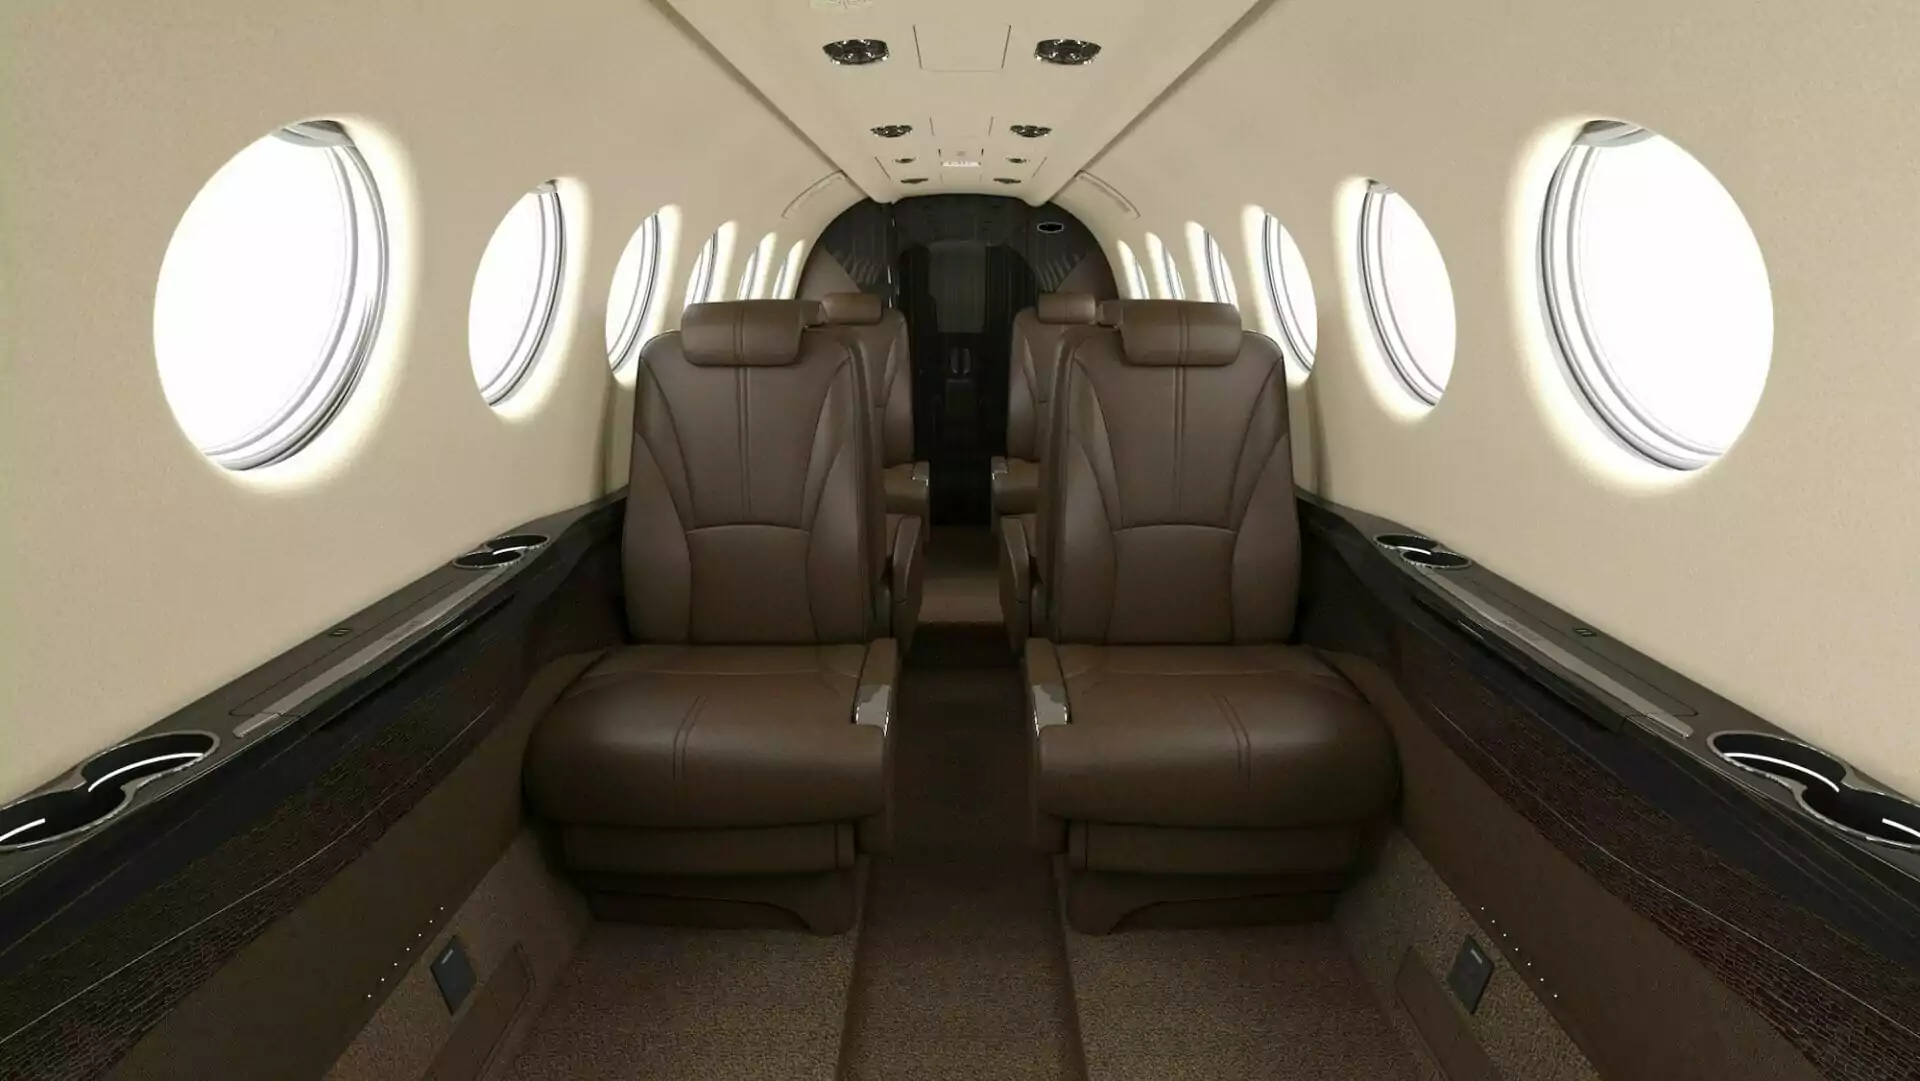 Beechcraft King Air 360 interior brown leather